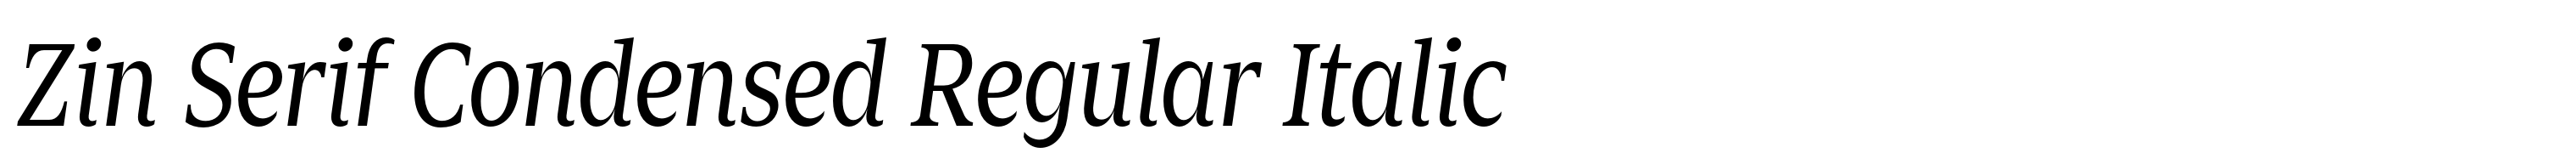 Zin Serif Condensed Regular Italic